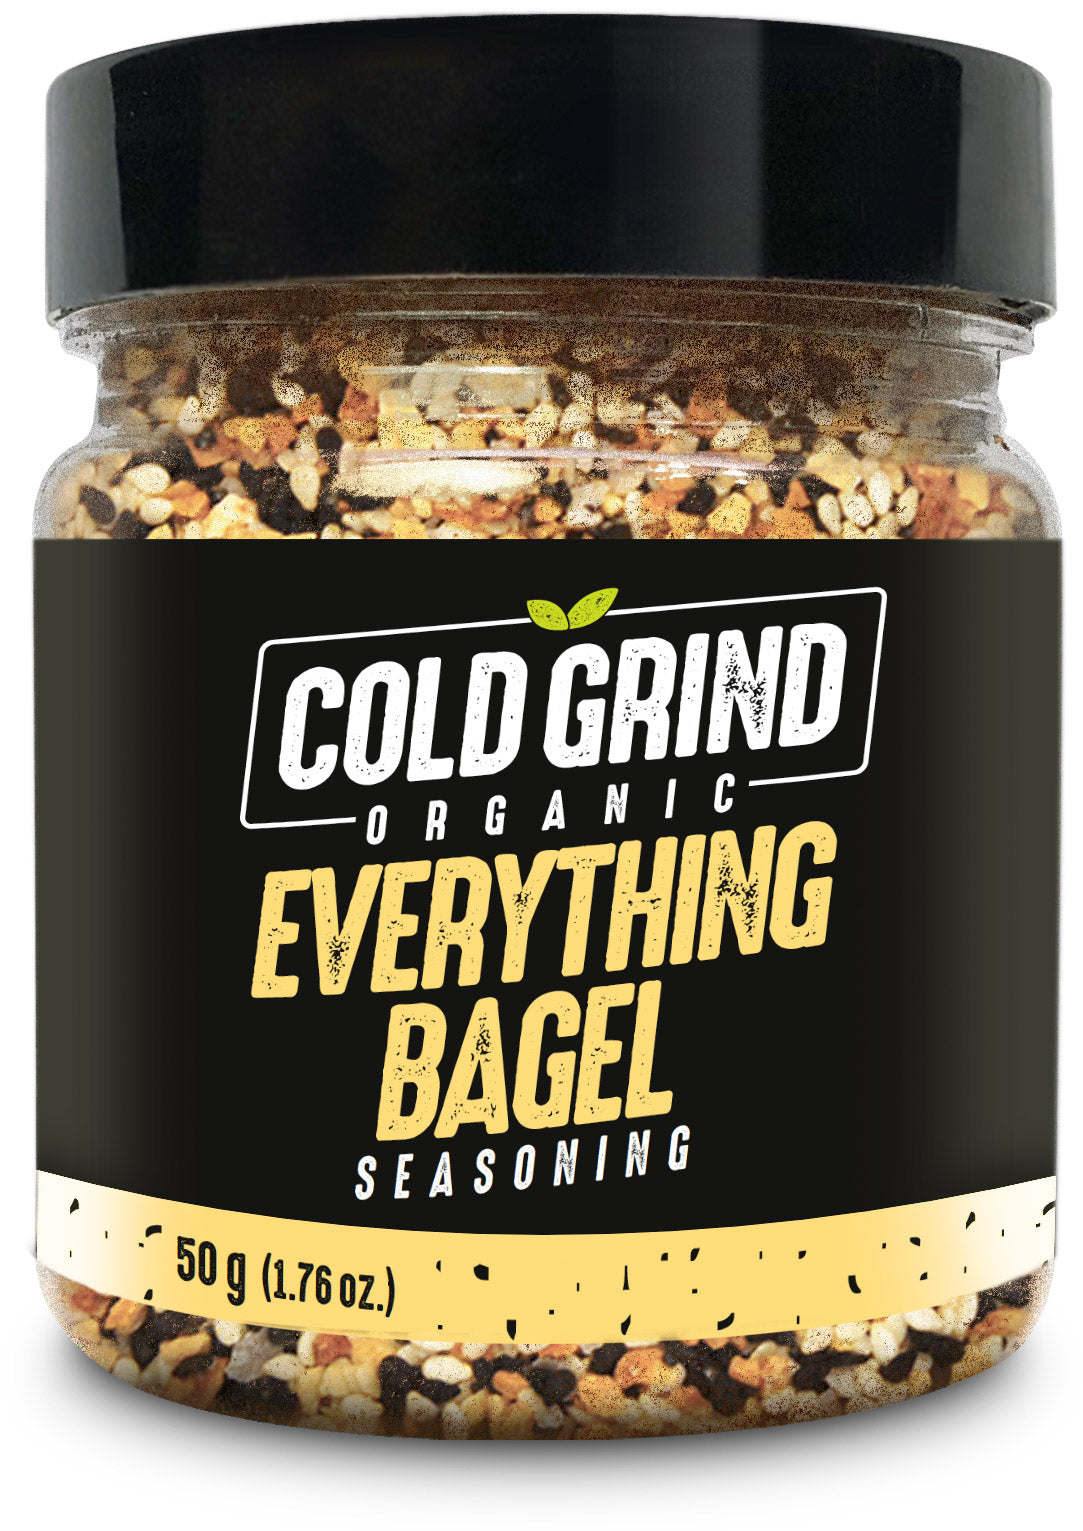 Organic Everything Bagel Seasoning by Cold Grind